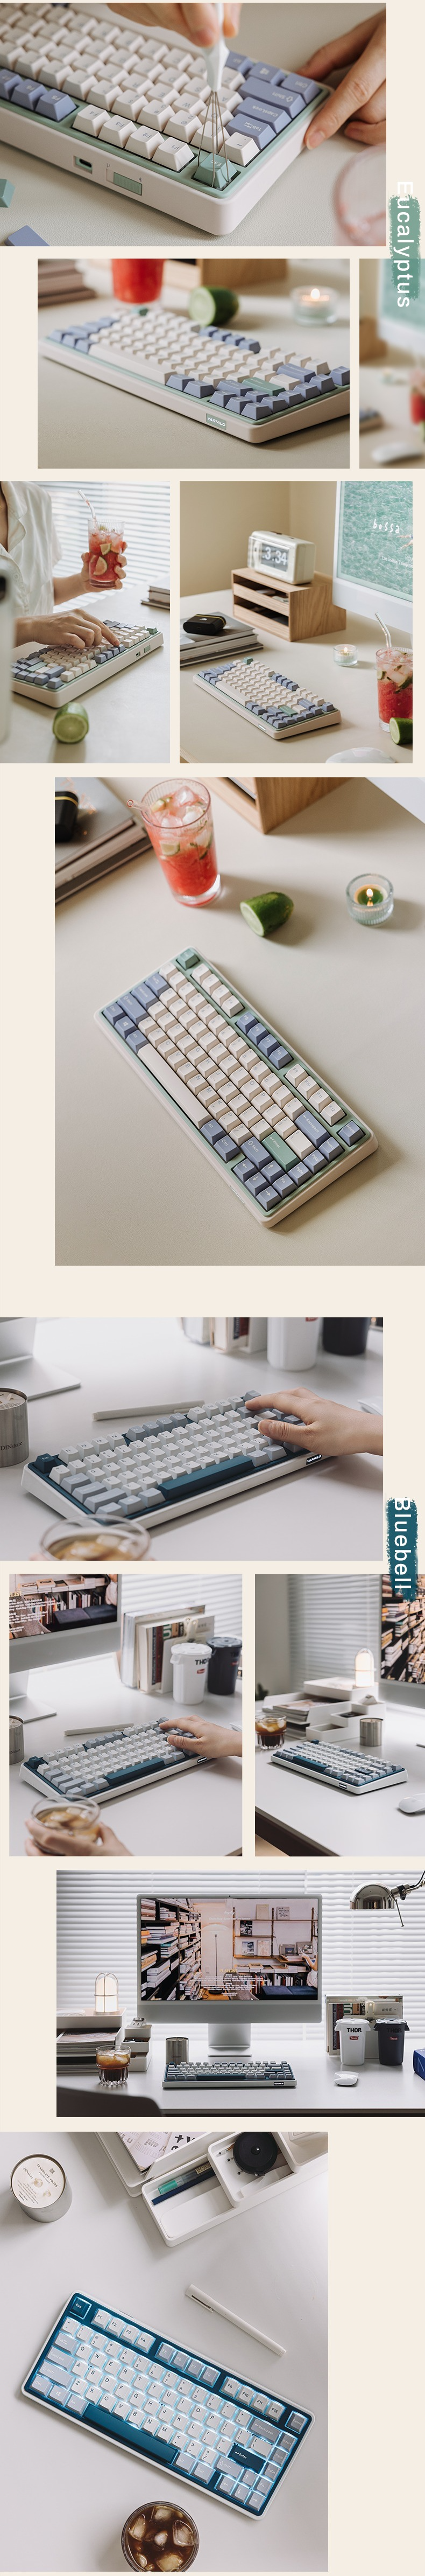 Varmilo Minilo 75% Gasket Mechanical Keyboard